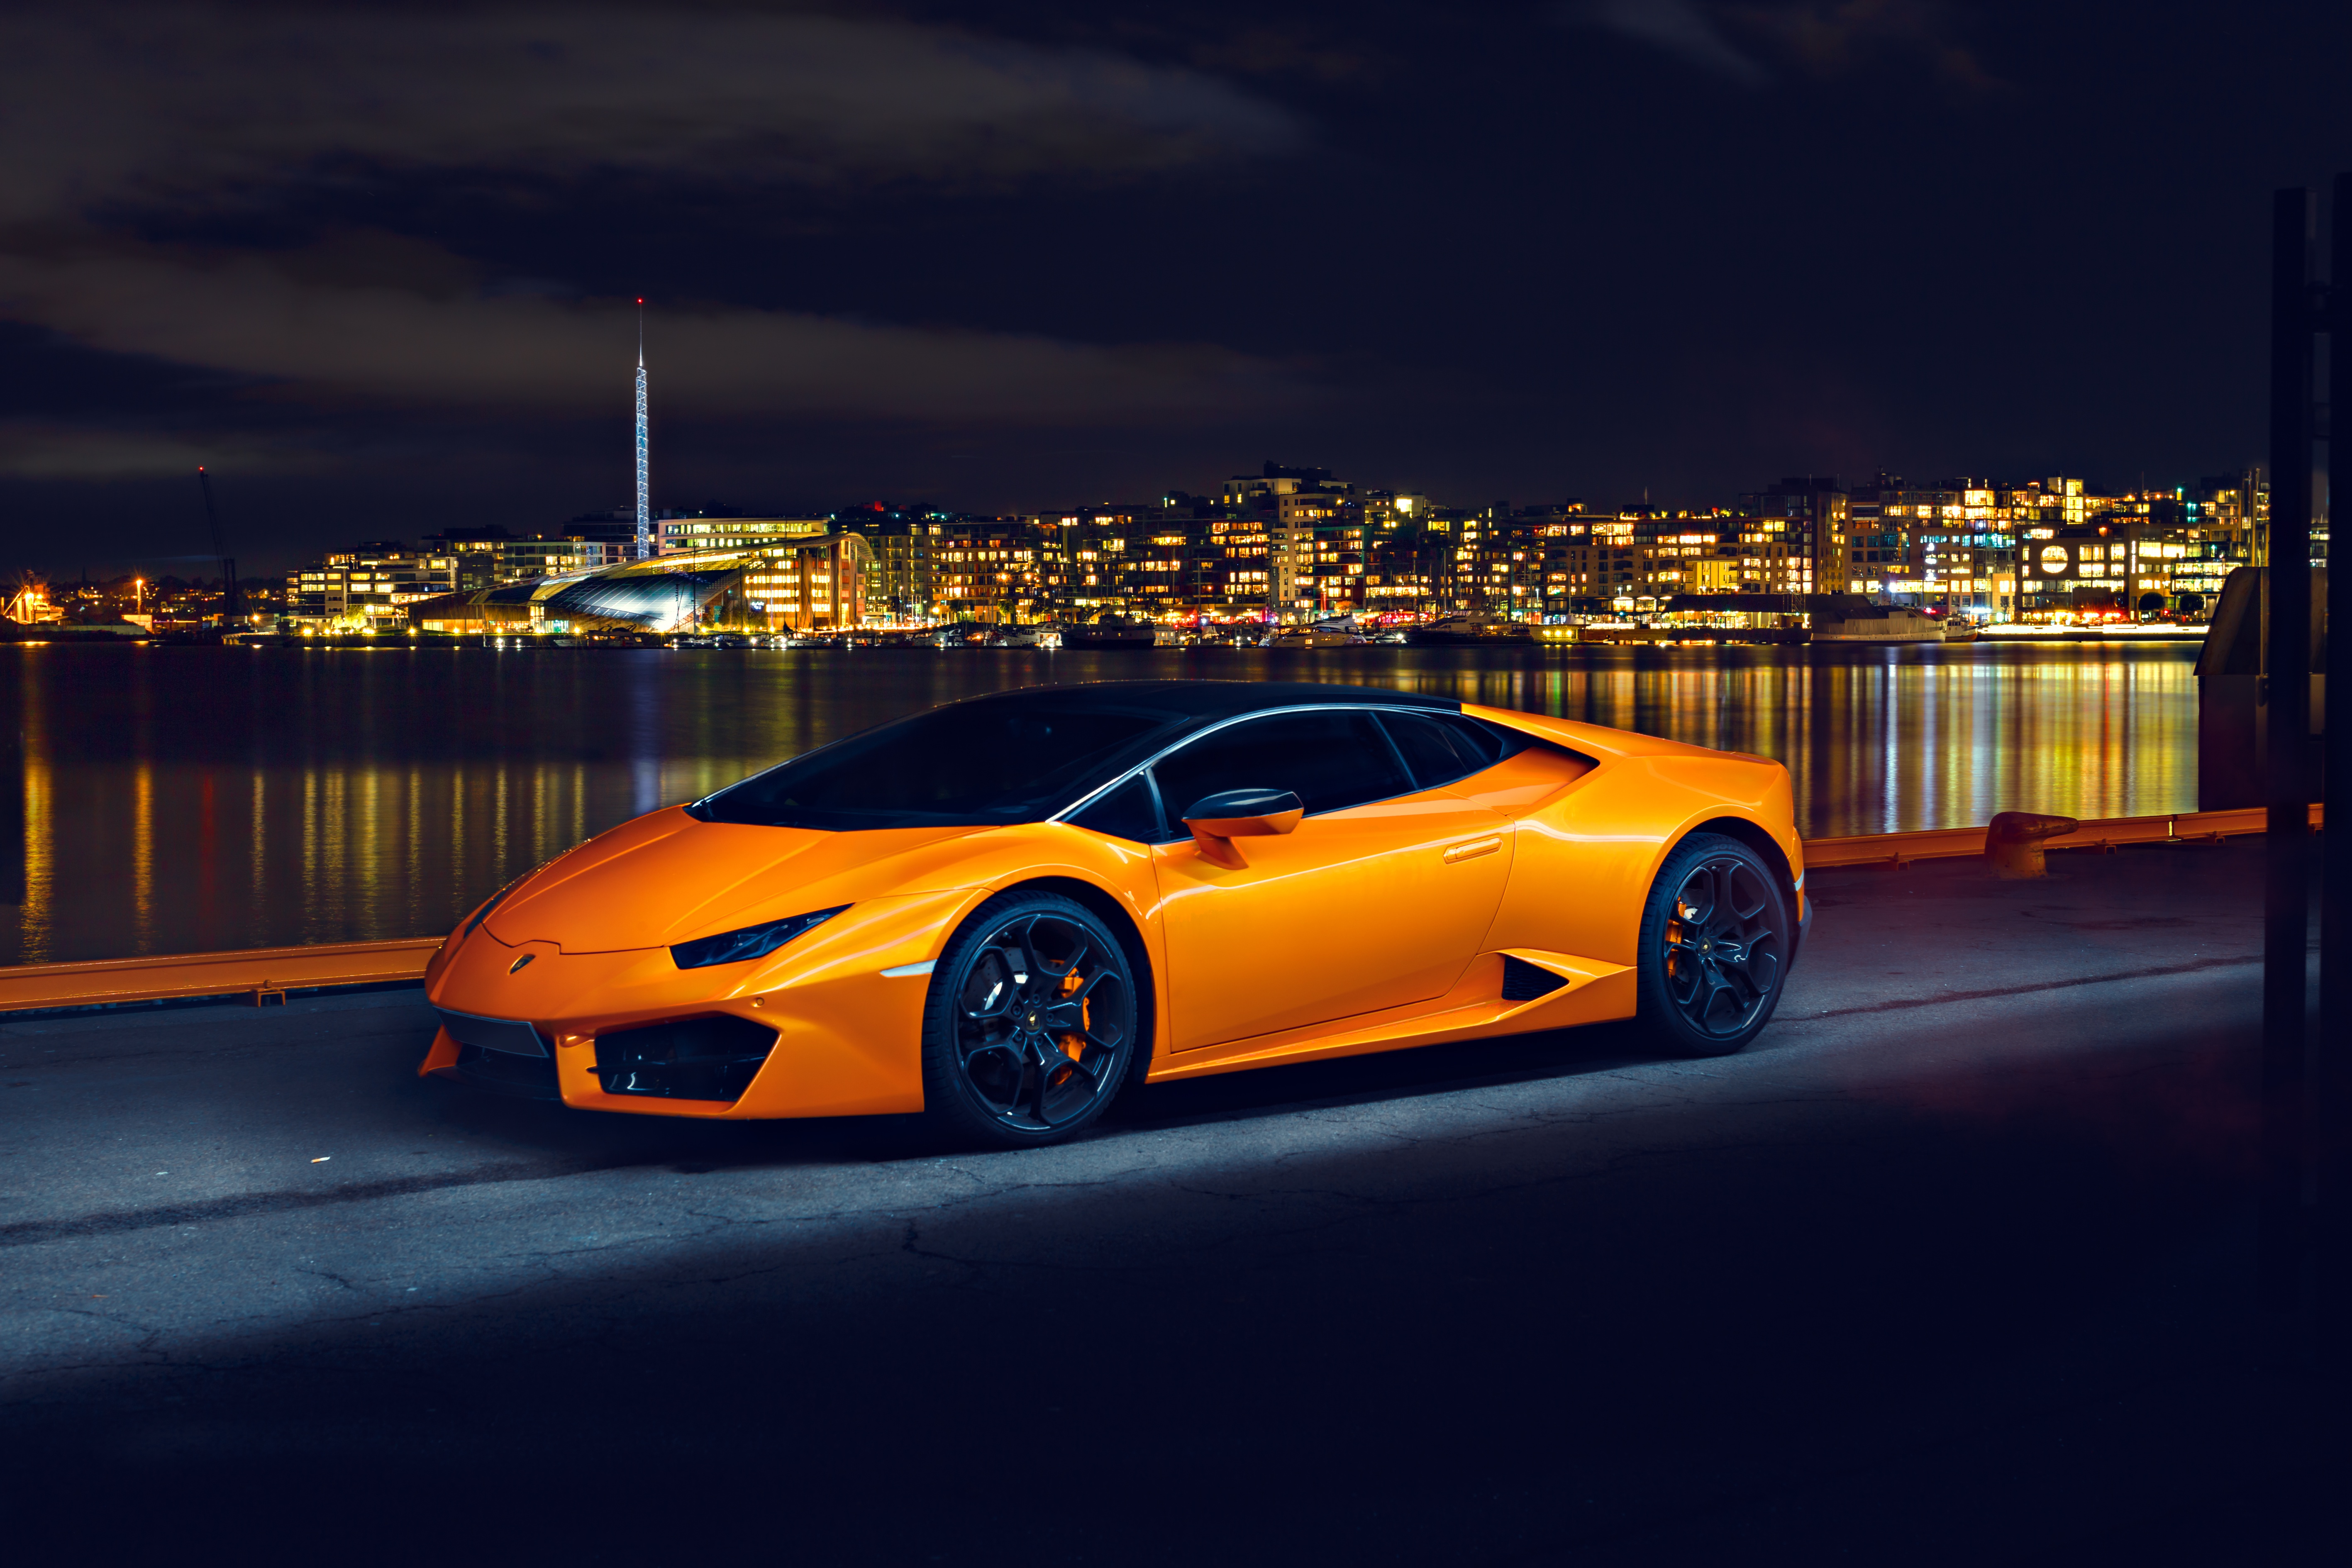 Baixe gratuitamente a imagem Lamborghini, Carro, Super Carro, Veículos, Carro Laranja, Lamborghini Huracán na área de trabalho do seu PC